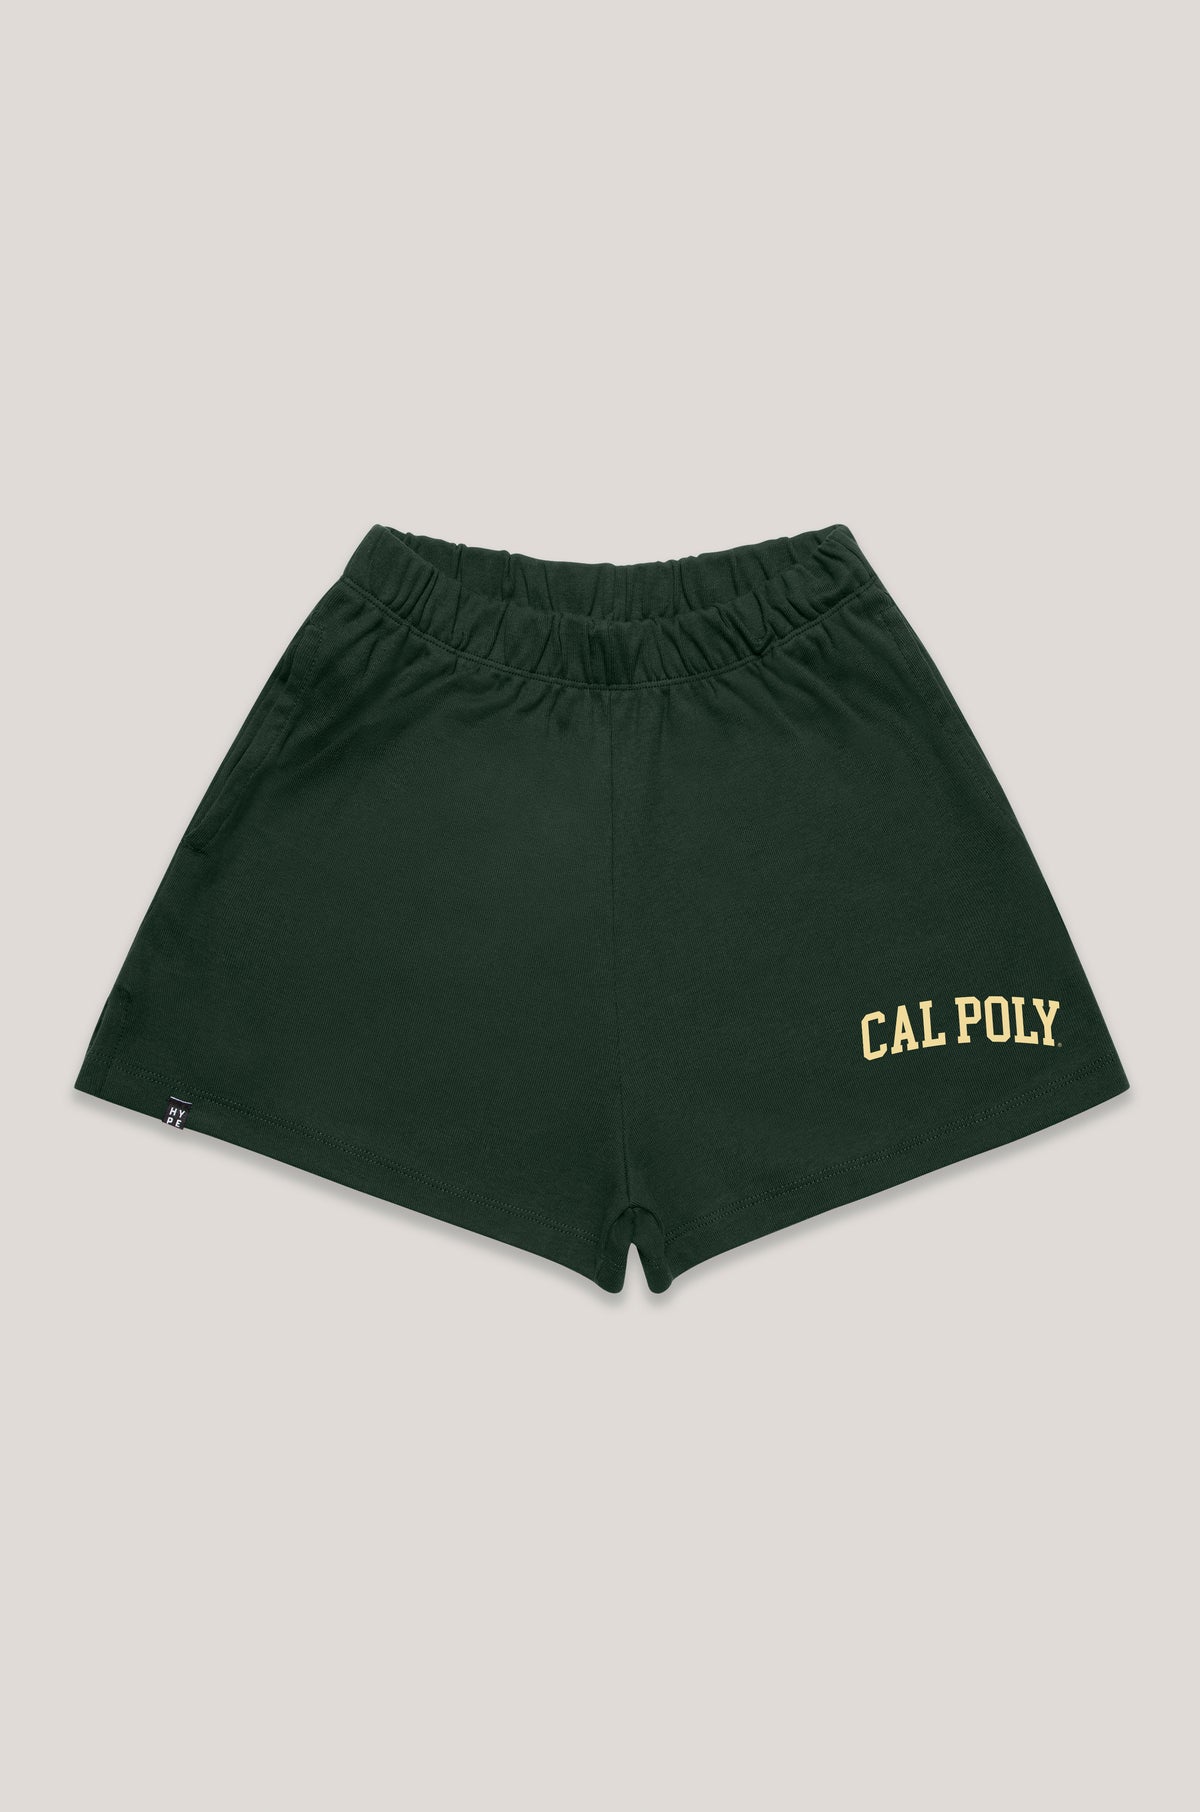 Cal Poly Track Shorts